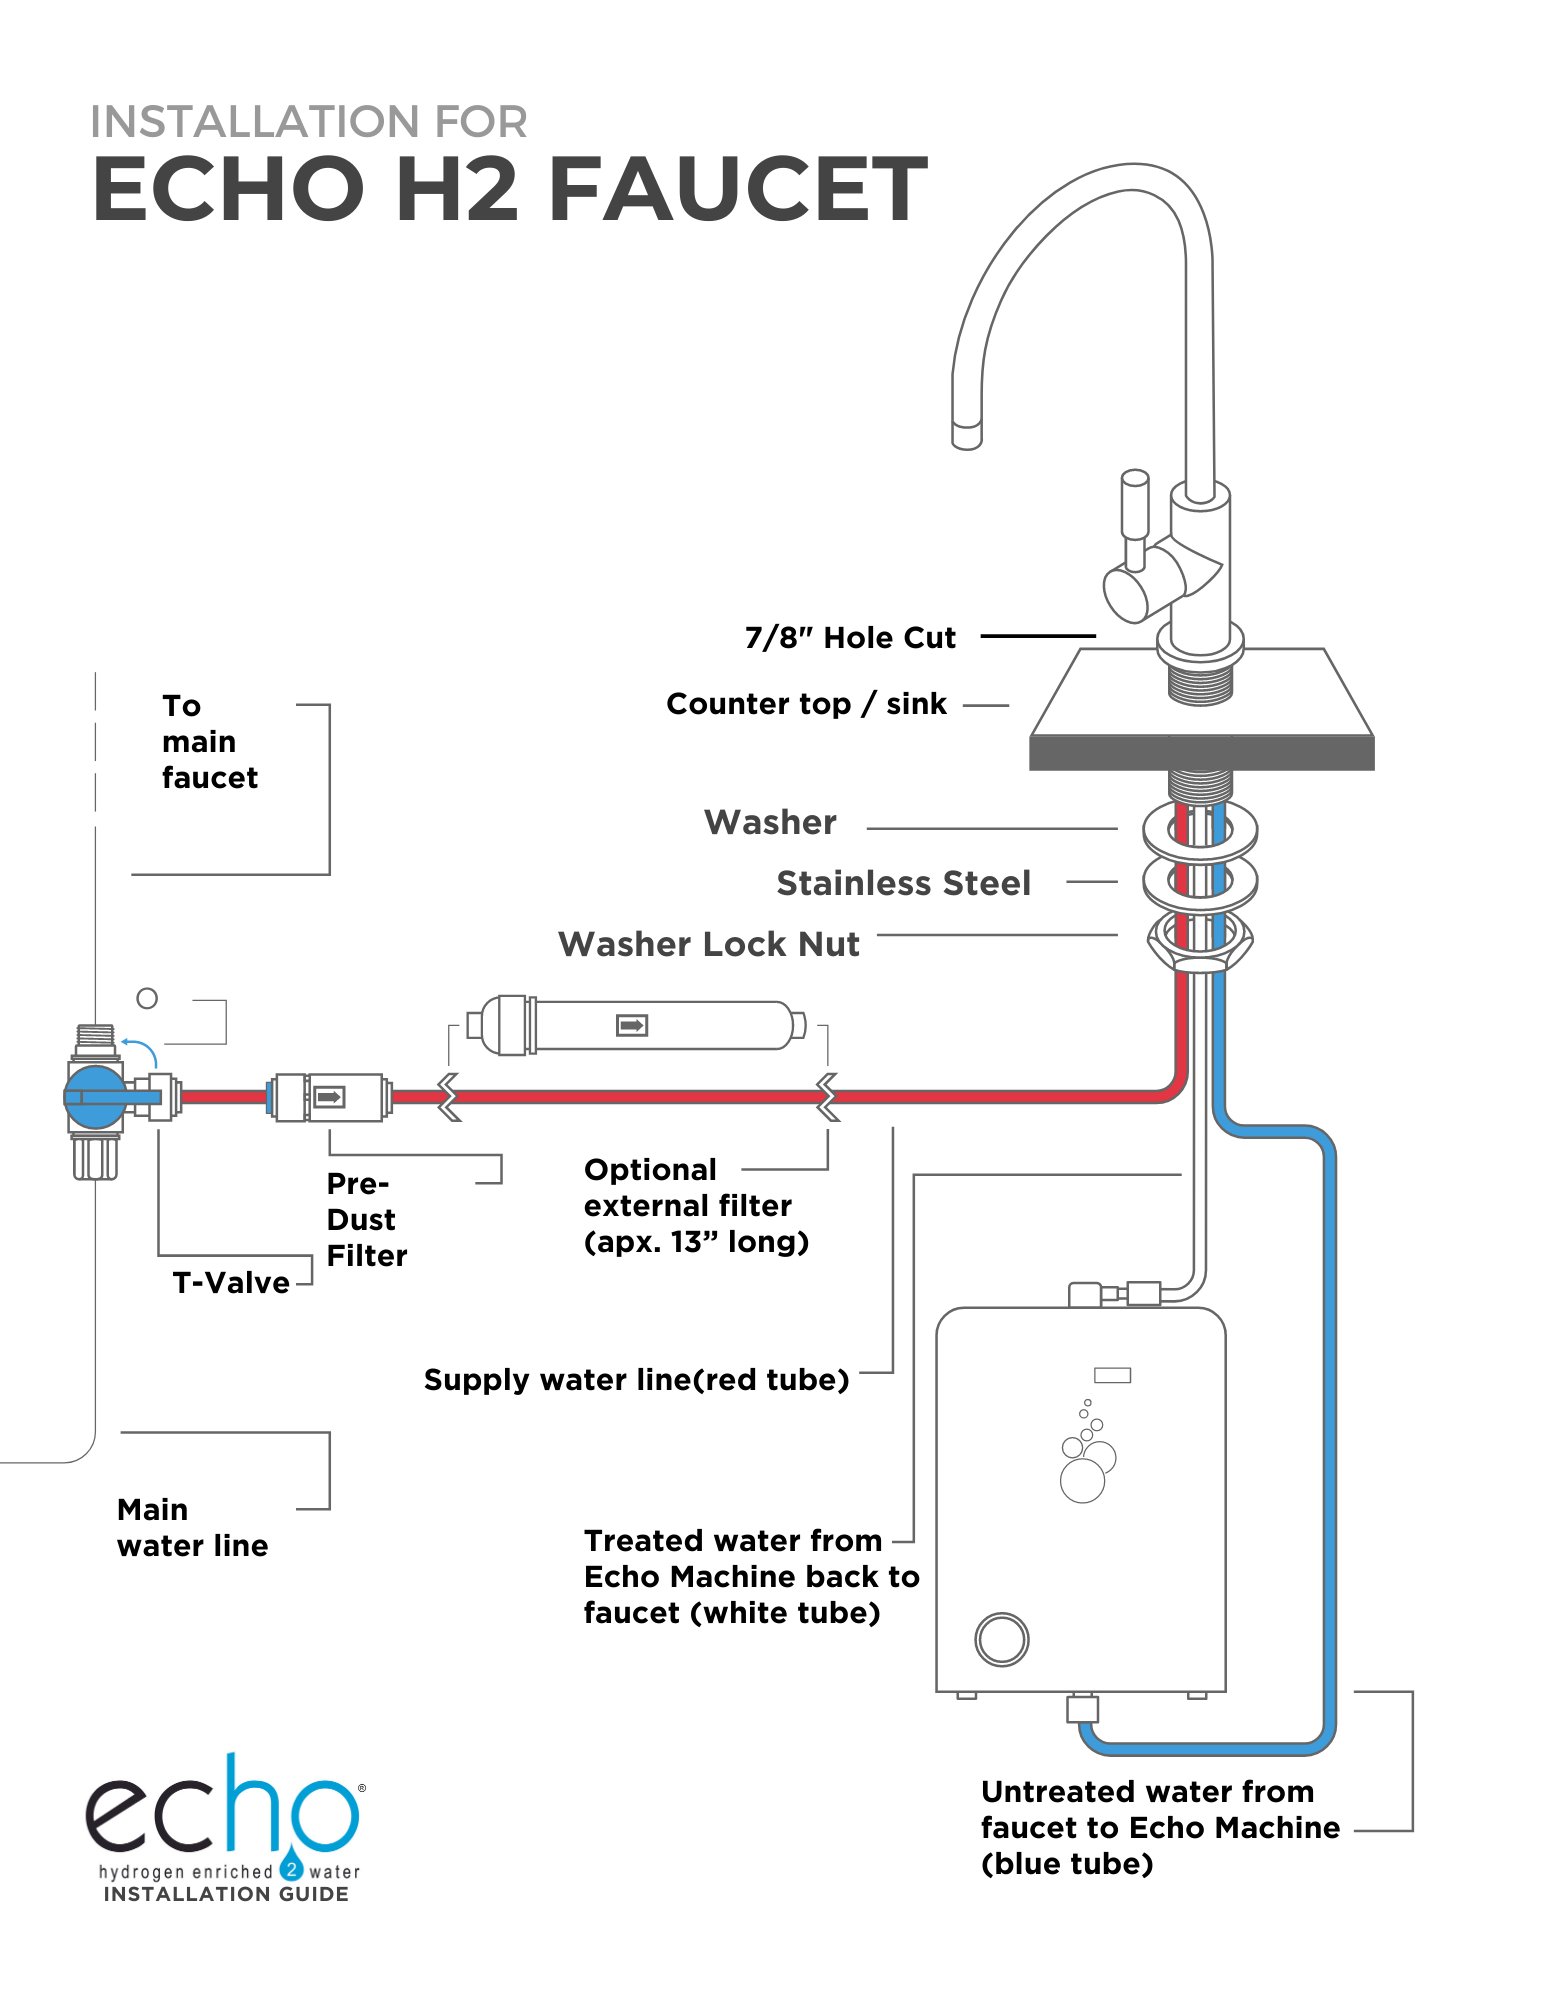 Echo H2 Machine Faucet Installation Diagram.png